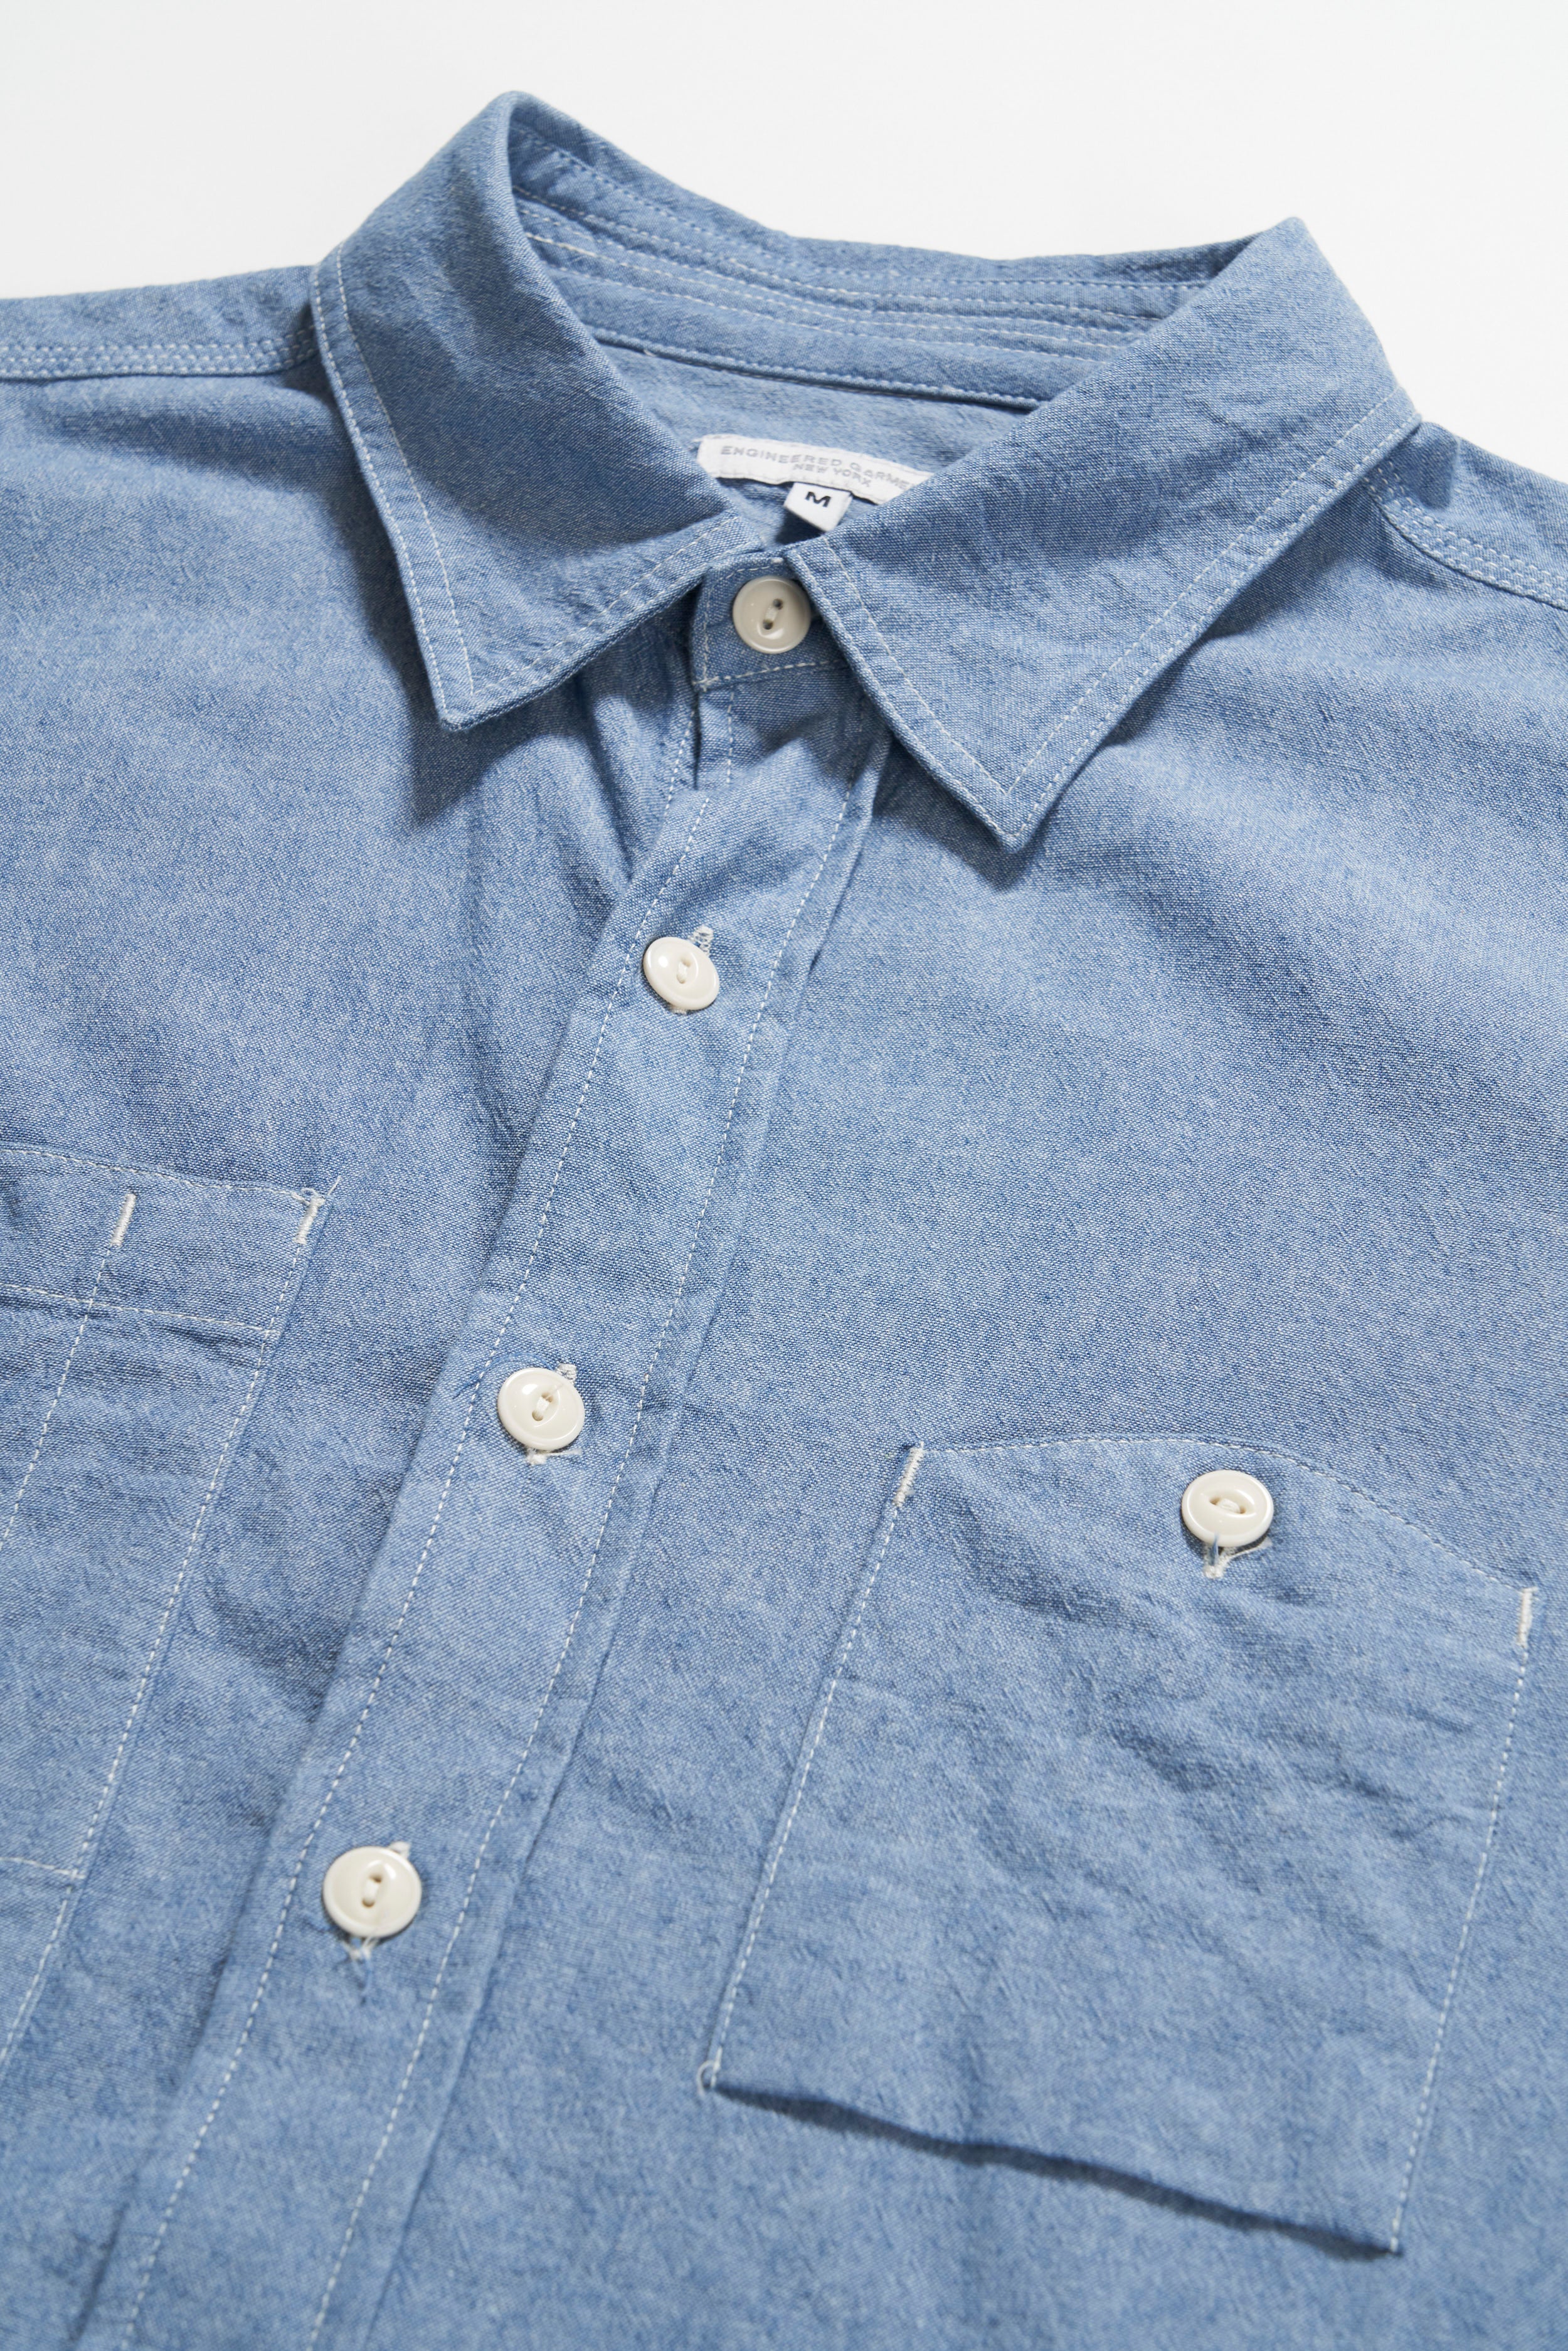 Work Shirt - Lt. Blue 4.5oz Cotton Chambray